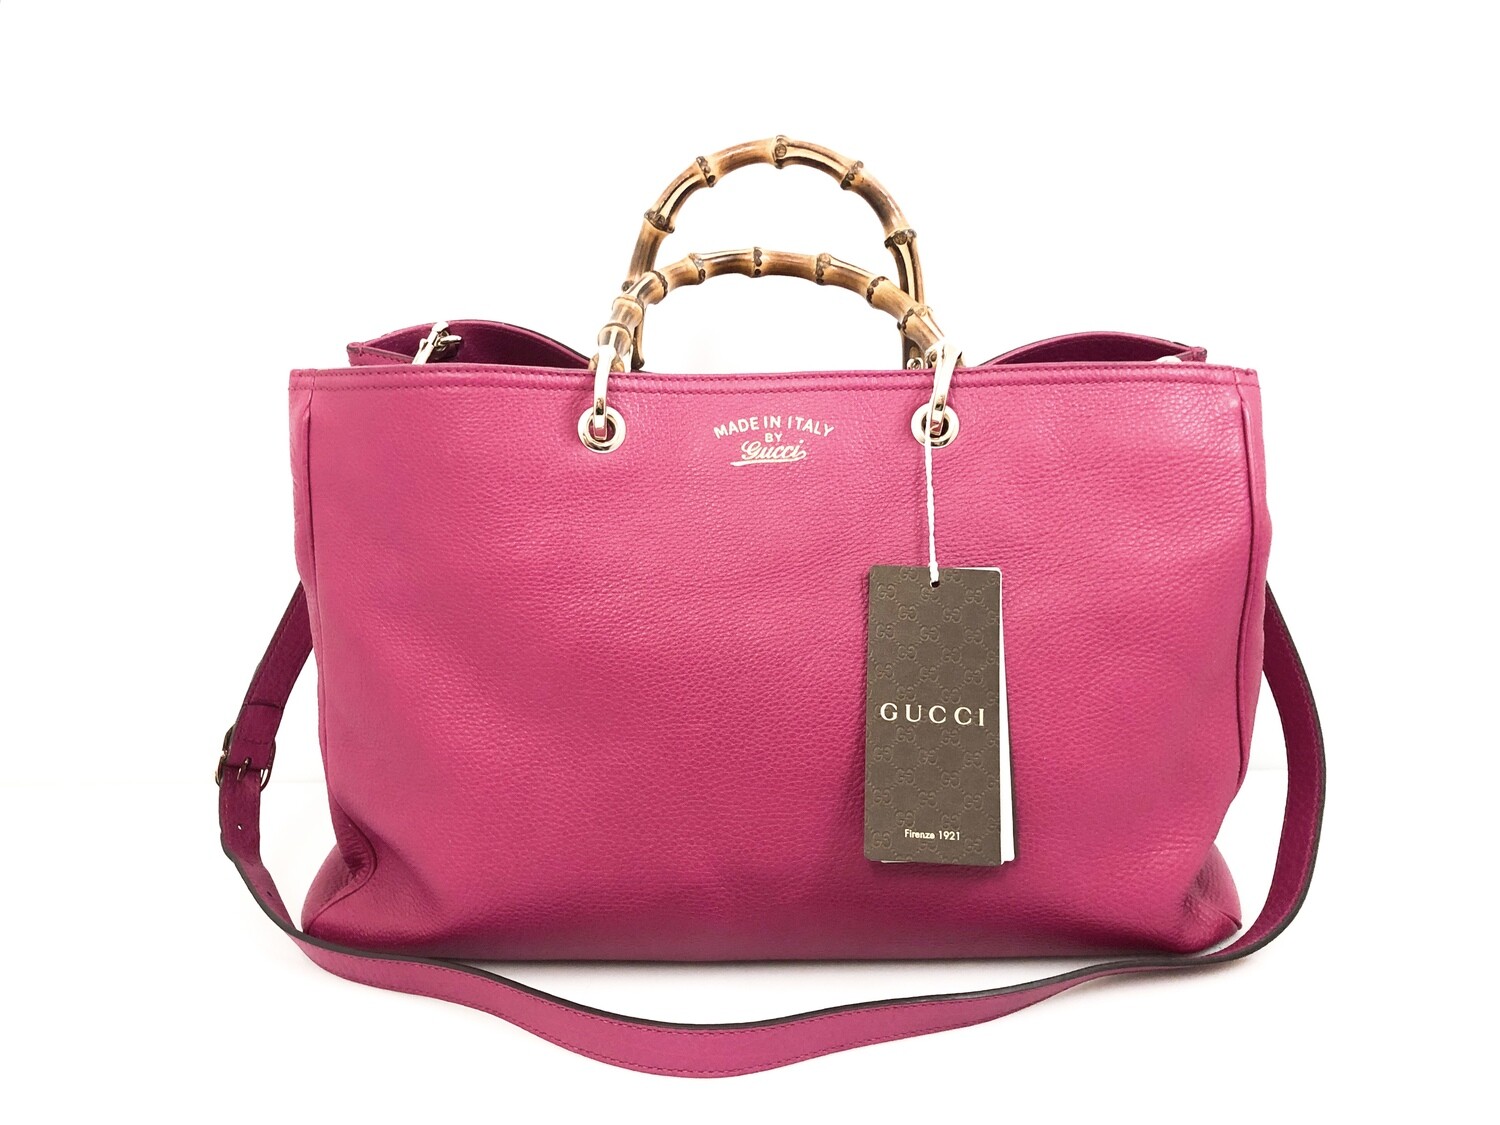 Gucci Bamboo Shopping bag